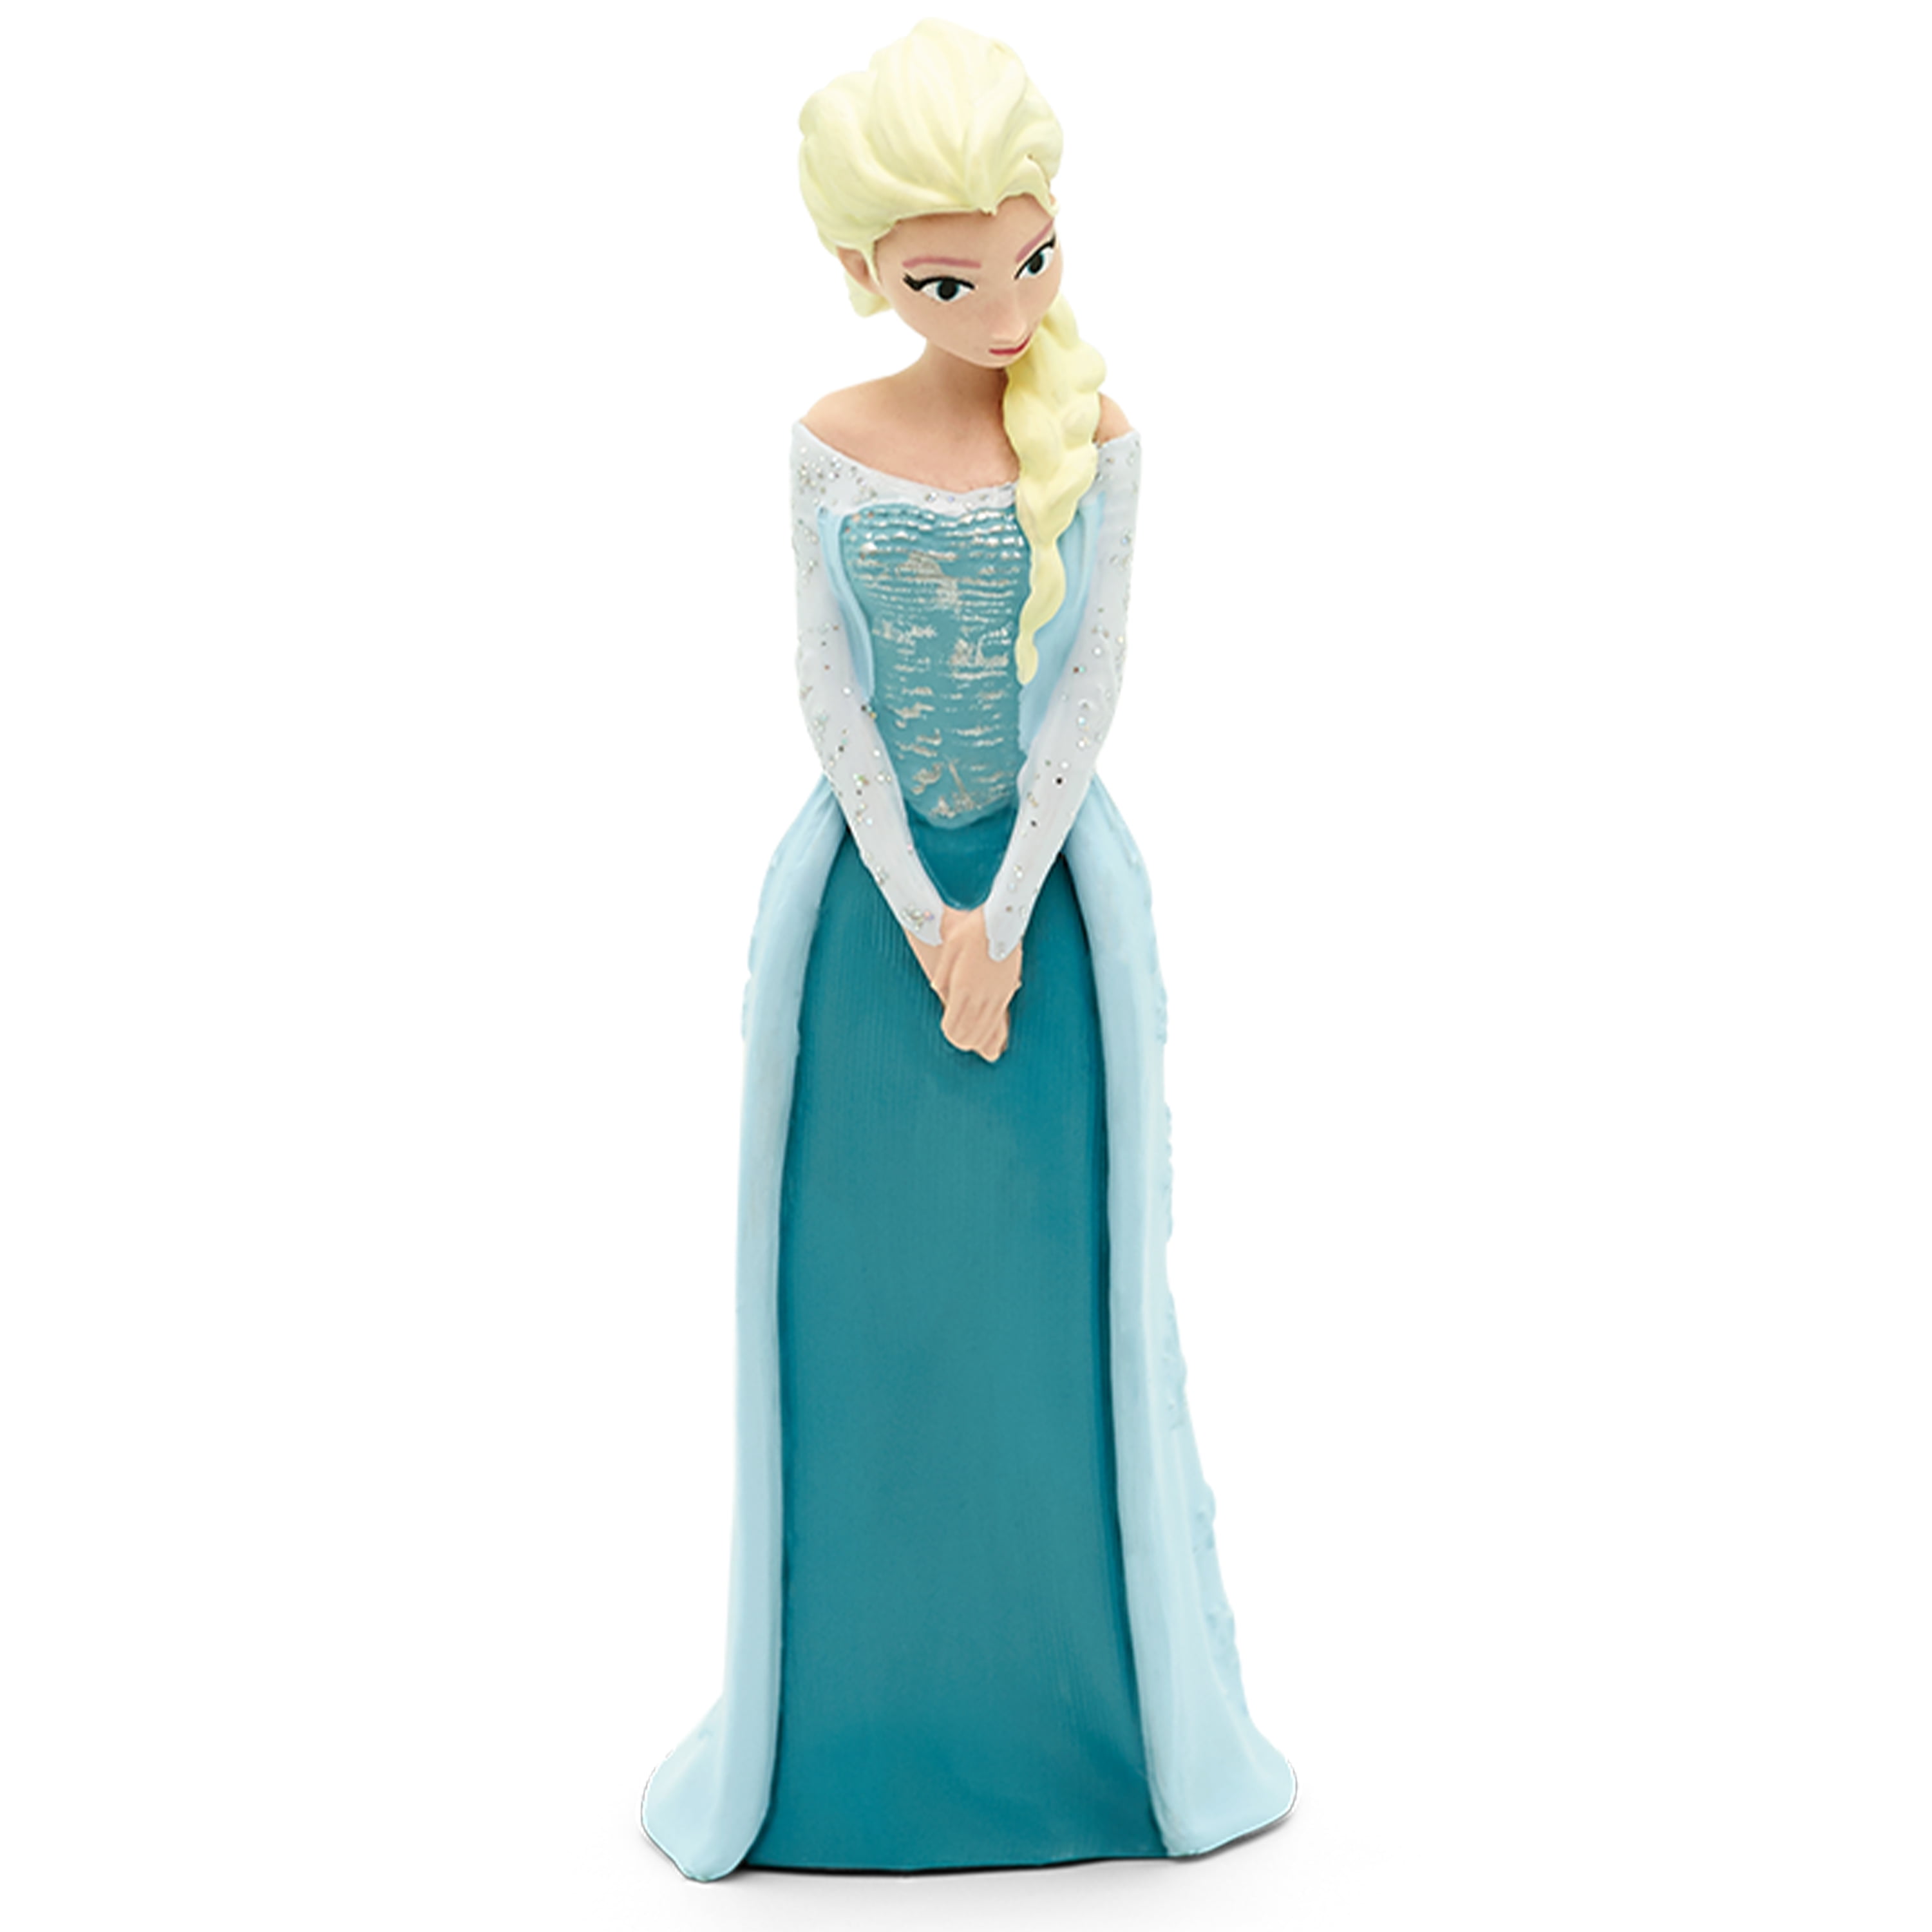 tonies Disney® The Princess & The Frog & Cinderella Tonie Audio